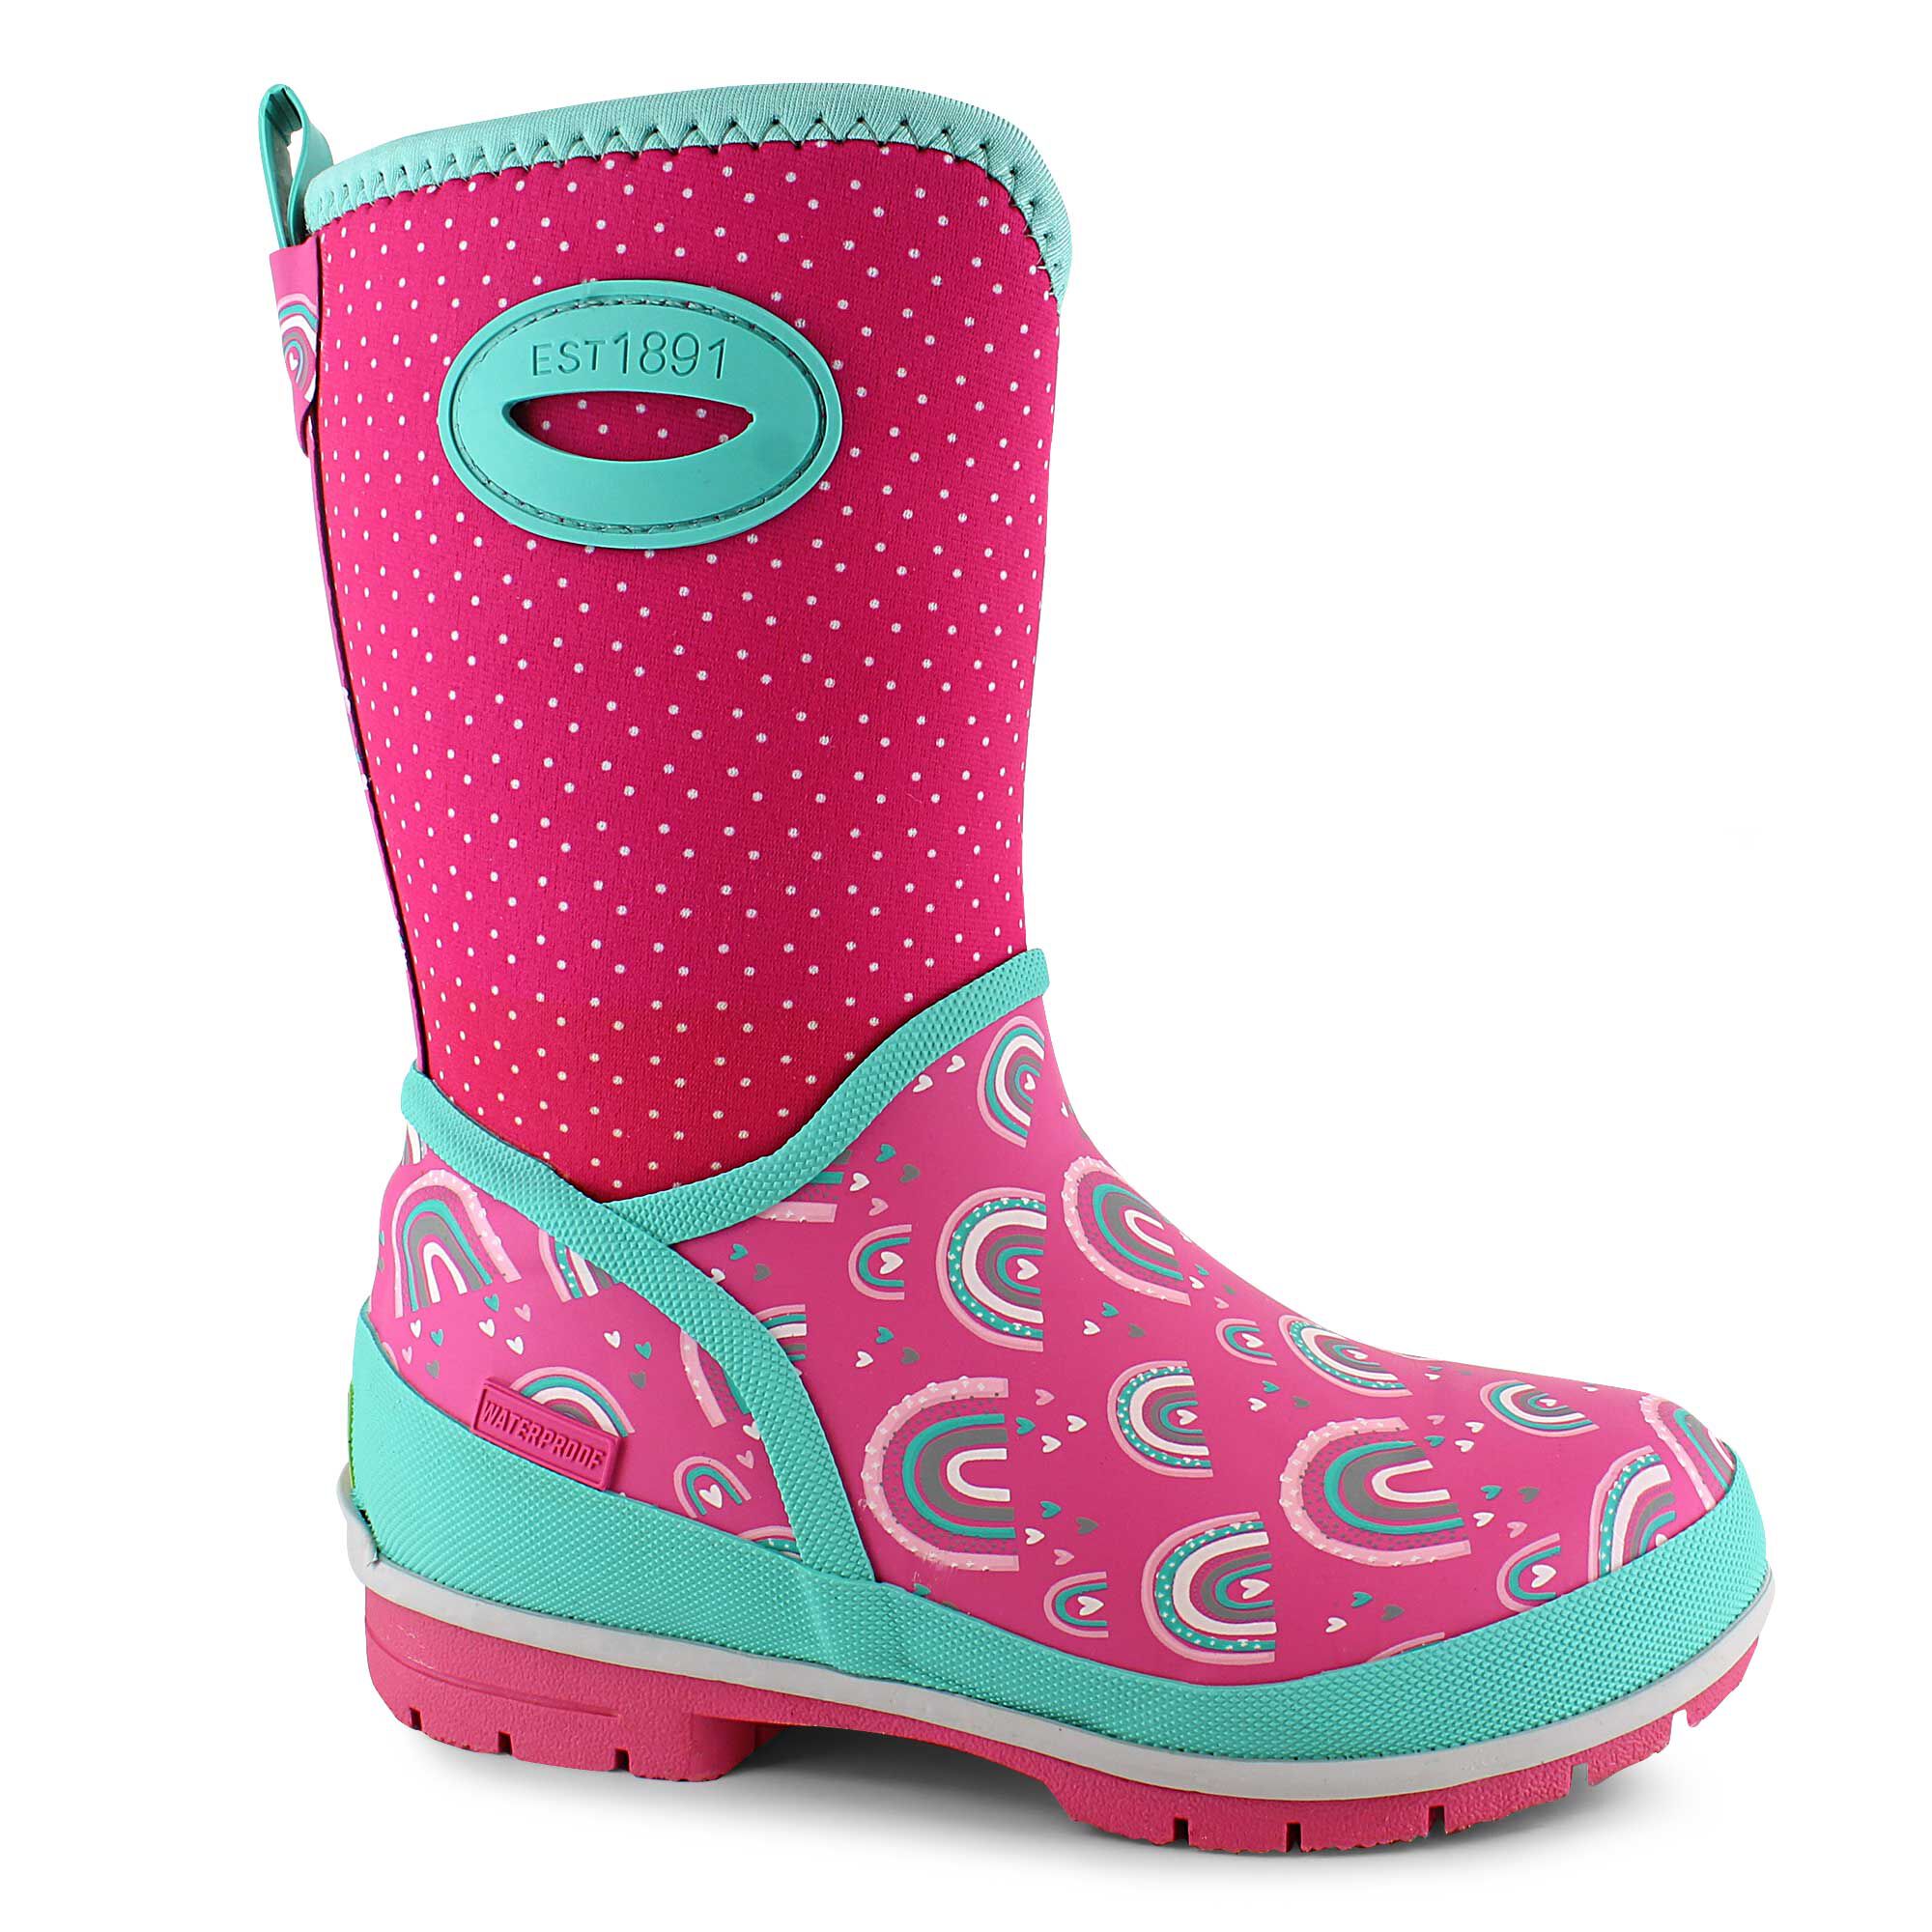 New girl's kids side zipper boots winter fuchsia hot pink wedge comfort 